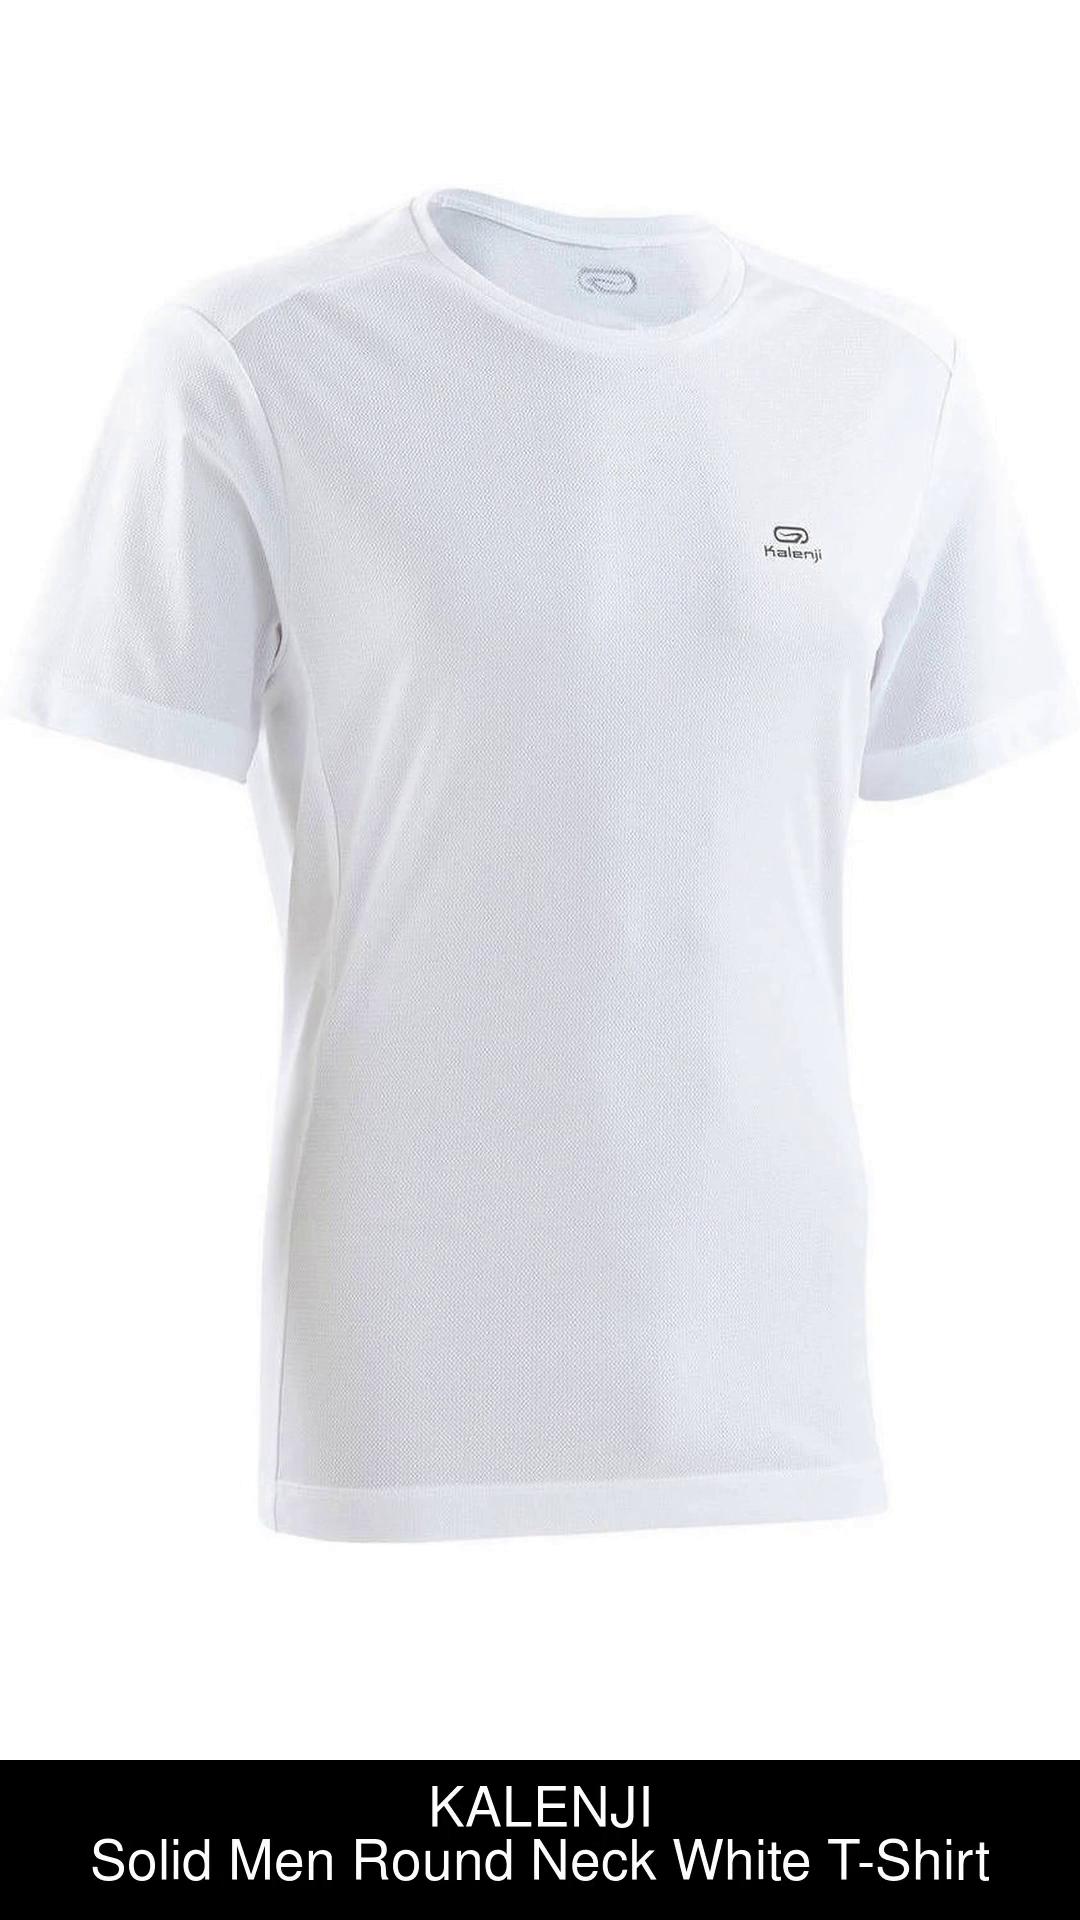 Decathlon - KALENJI Solid Men Round Neck White T-Shirt - Buy Decathlon -  KALENJI Solid Men Round Neck White T-Shirt Online at Best Prices in India